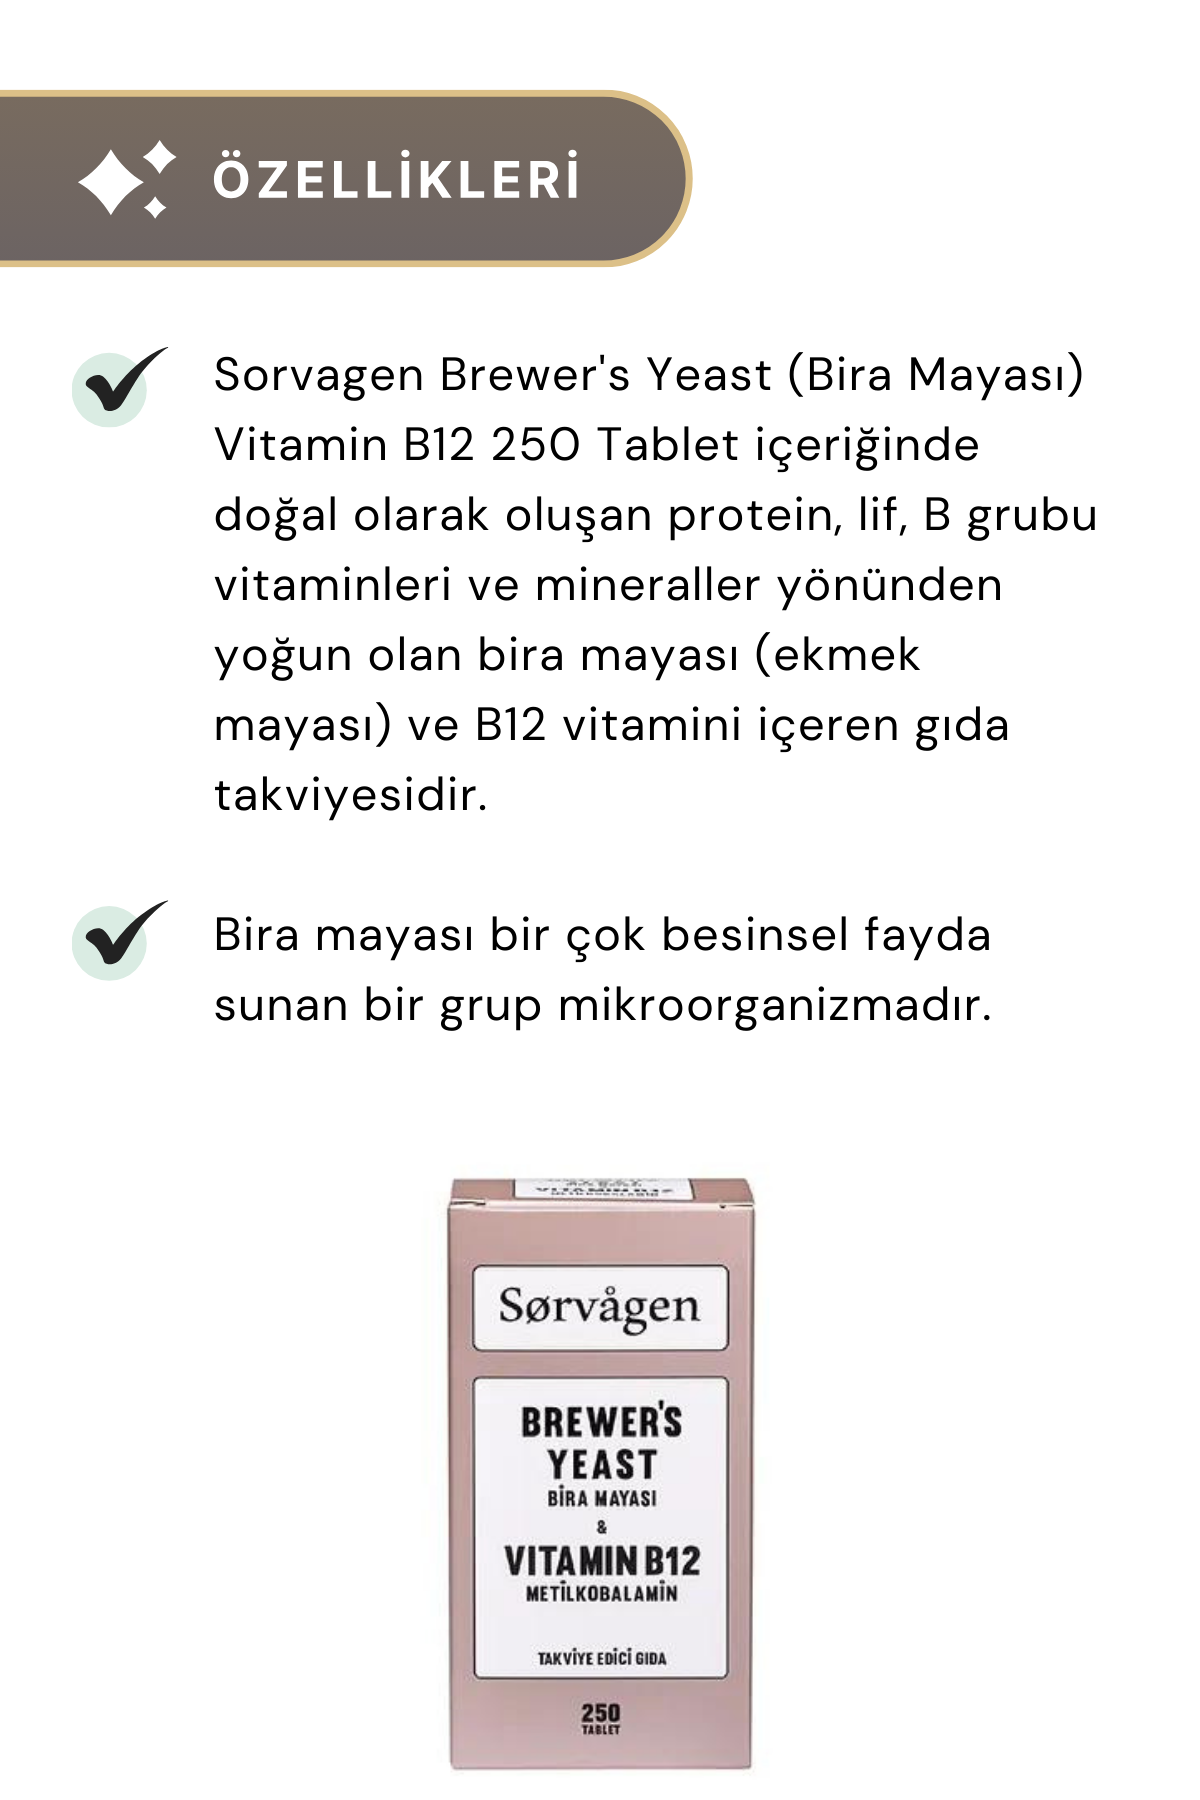 Sorvagen Brewer's Yeast (Bira Mayası) Vitamin B12 250 Tablet 3'lü Paket